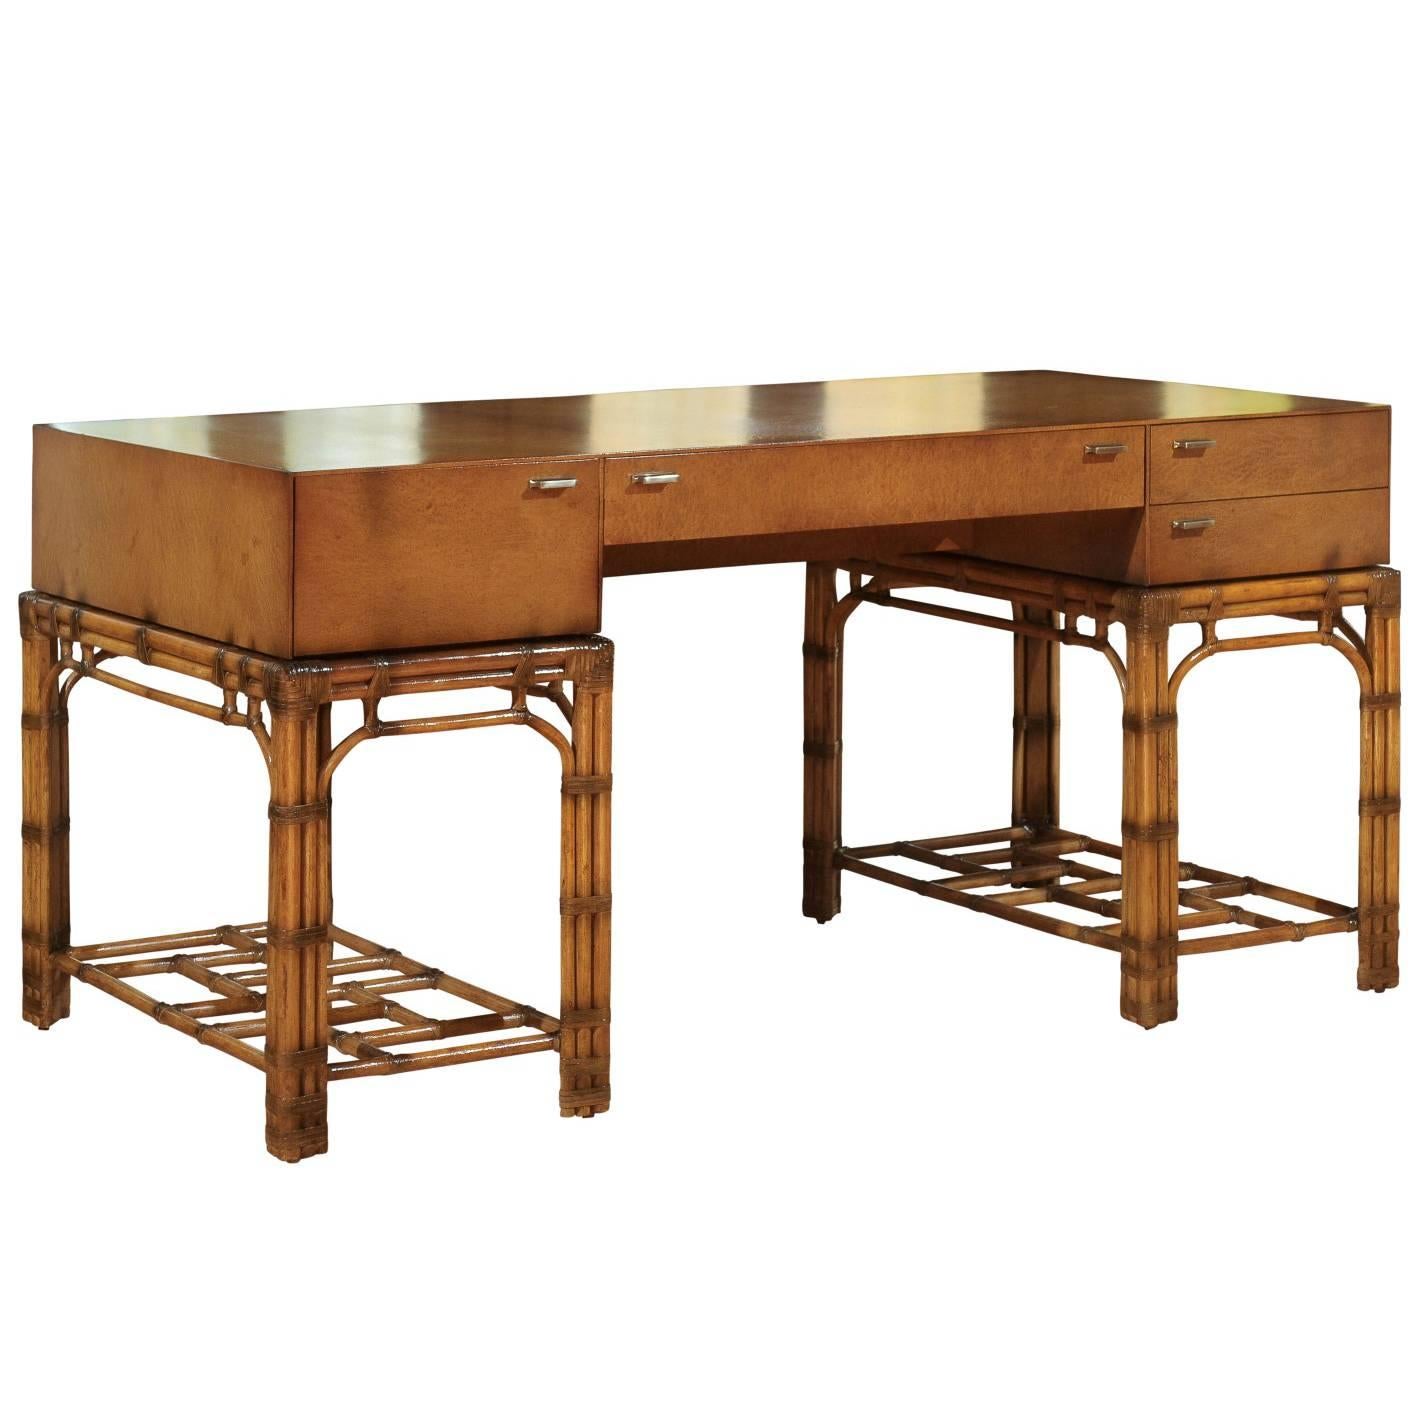 Stunning Restored Vintage Double Pedestal Campaign Desk in Birdseye Maple 